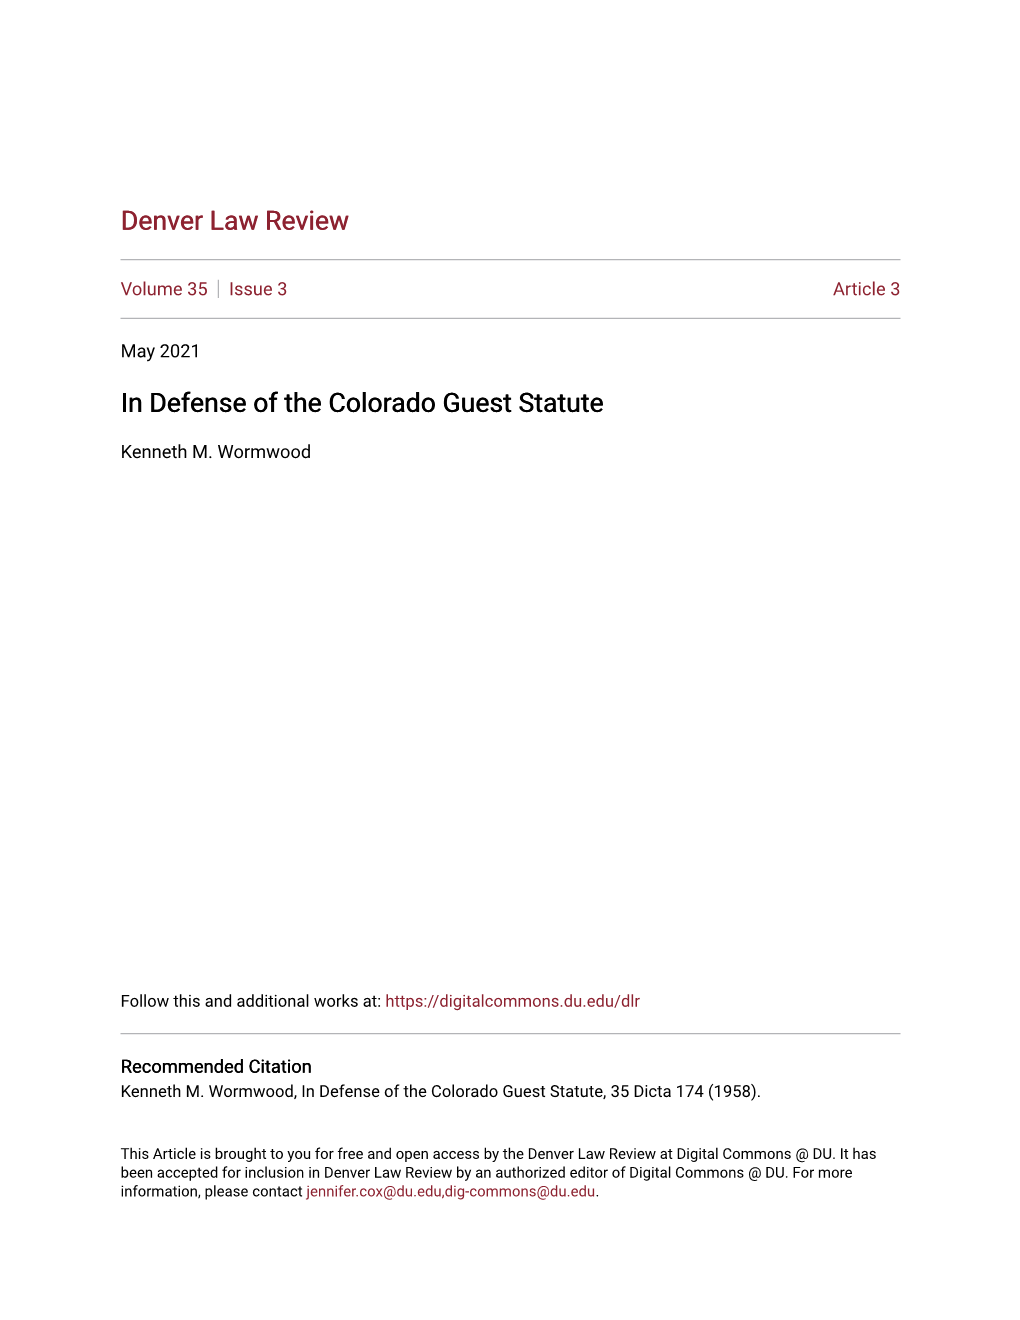 In Defense of the Colorado Guest Statute